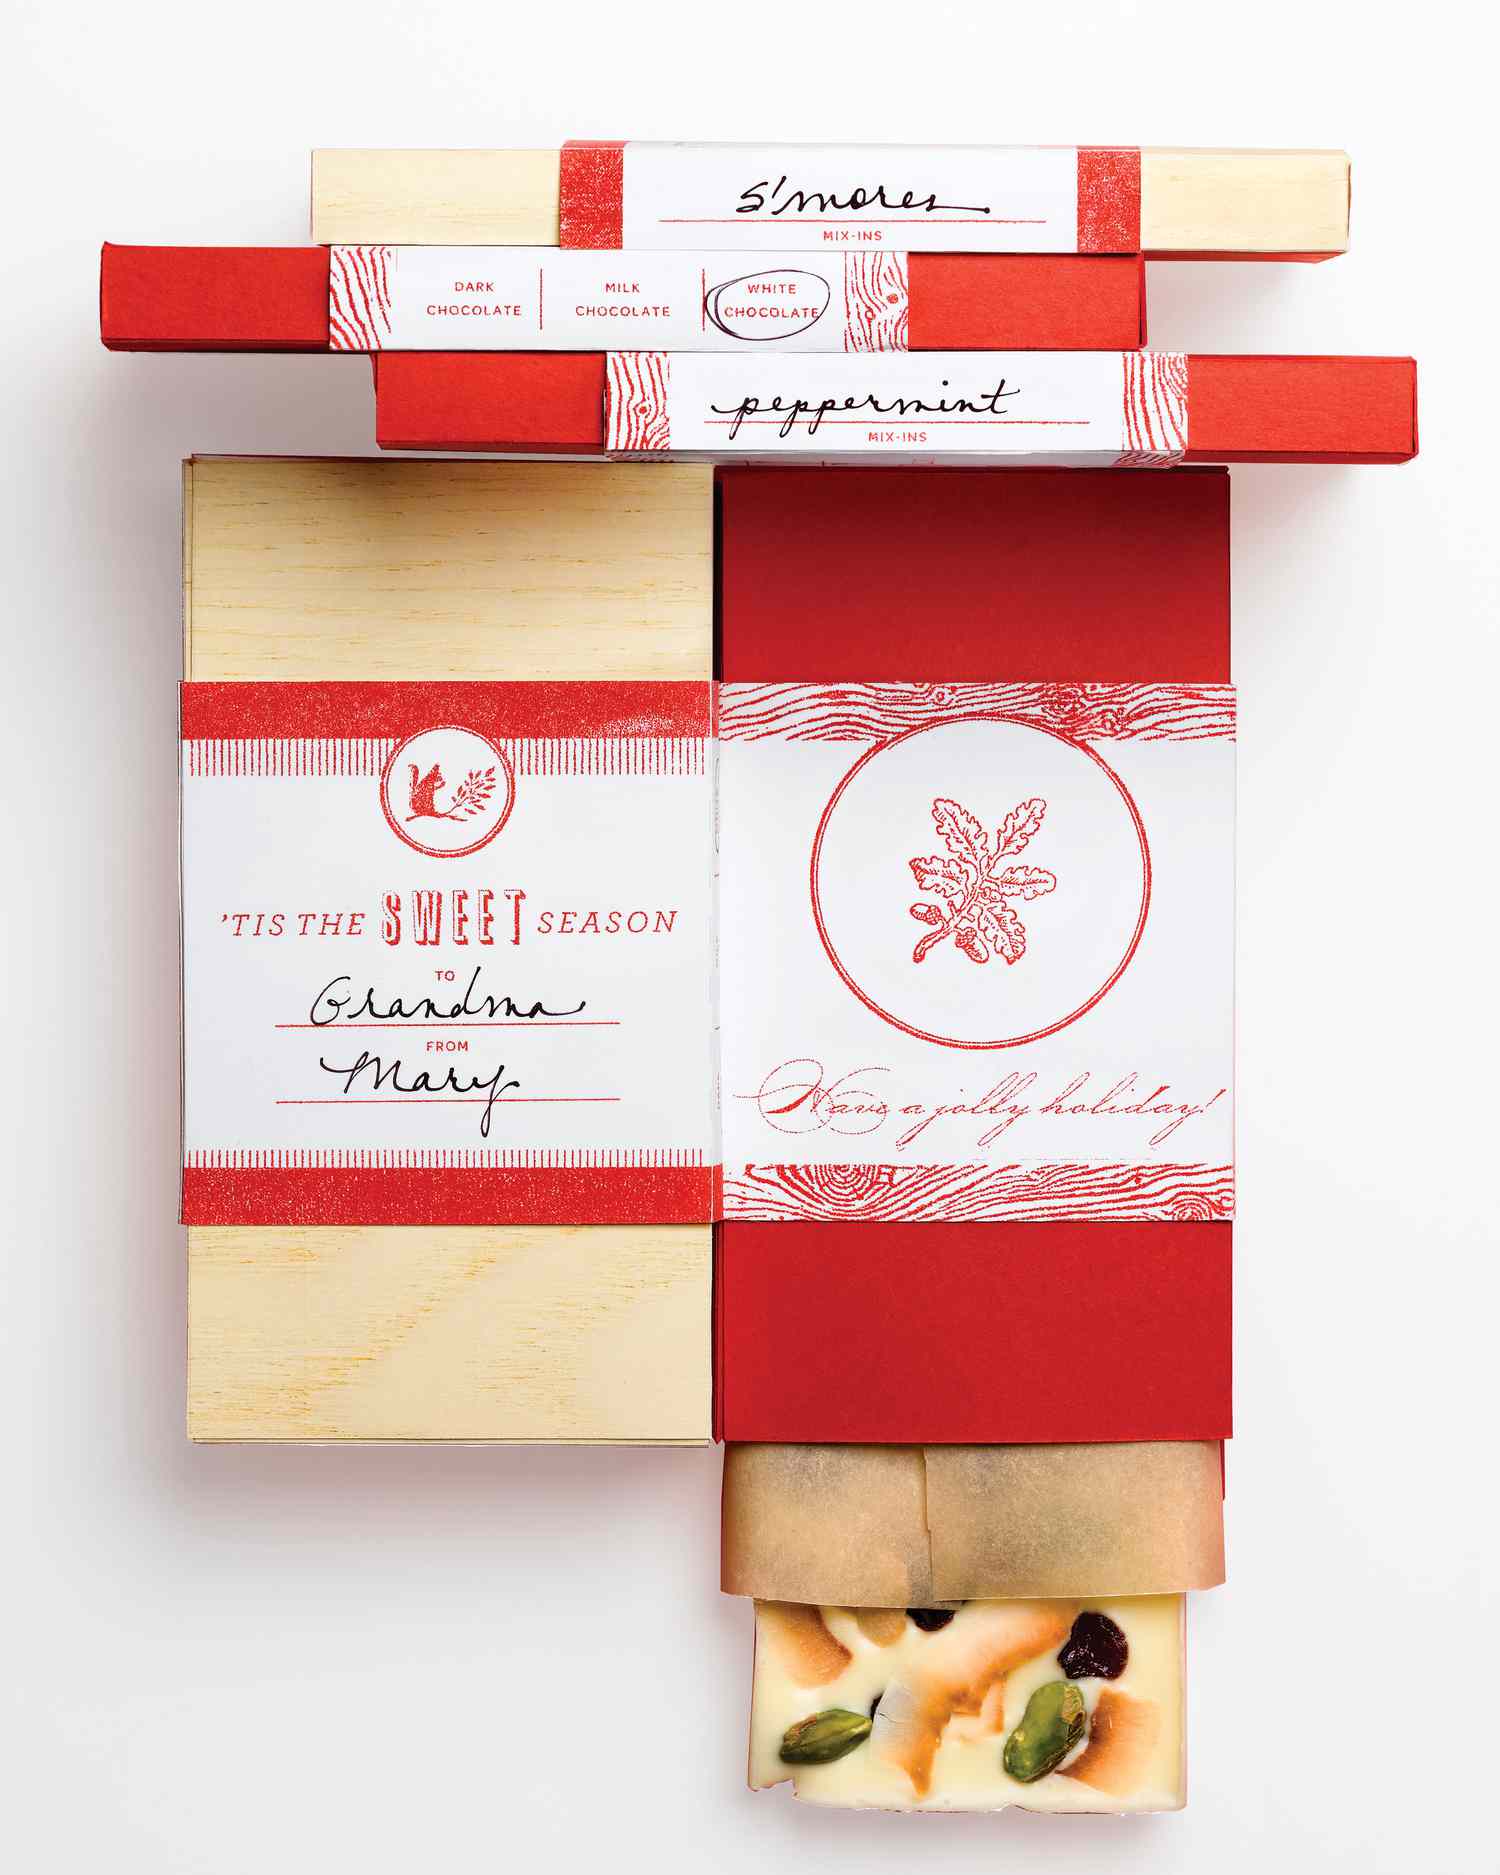 Christmas Folding Gift Box Bakery Box Lolly Box 